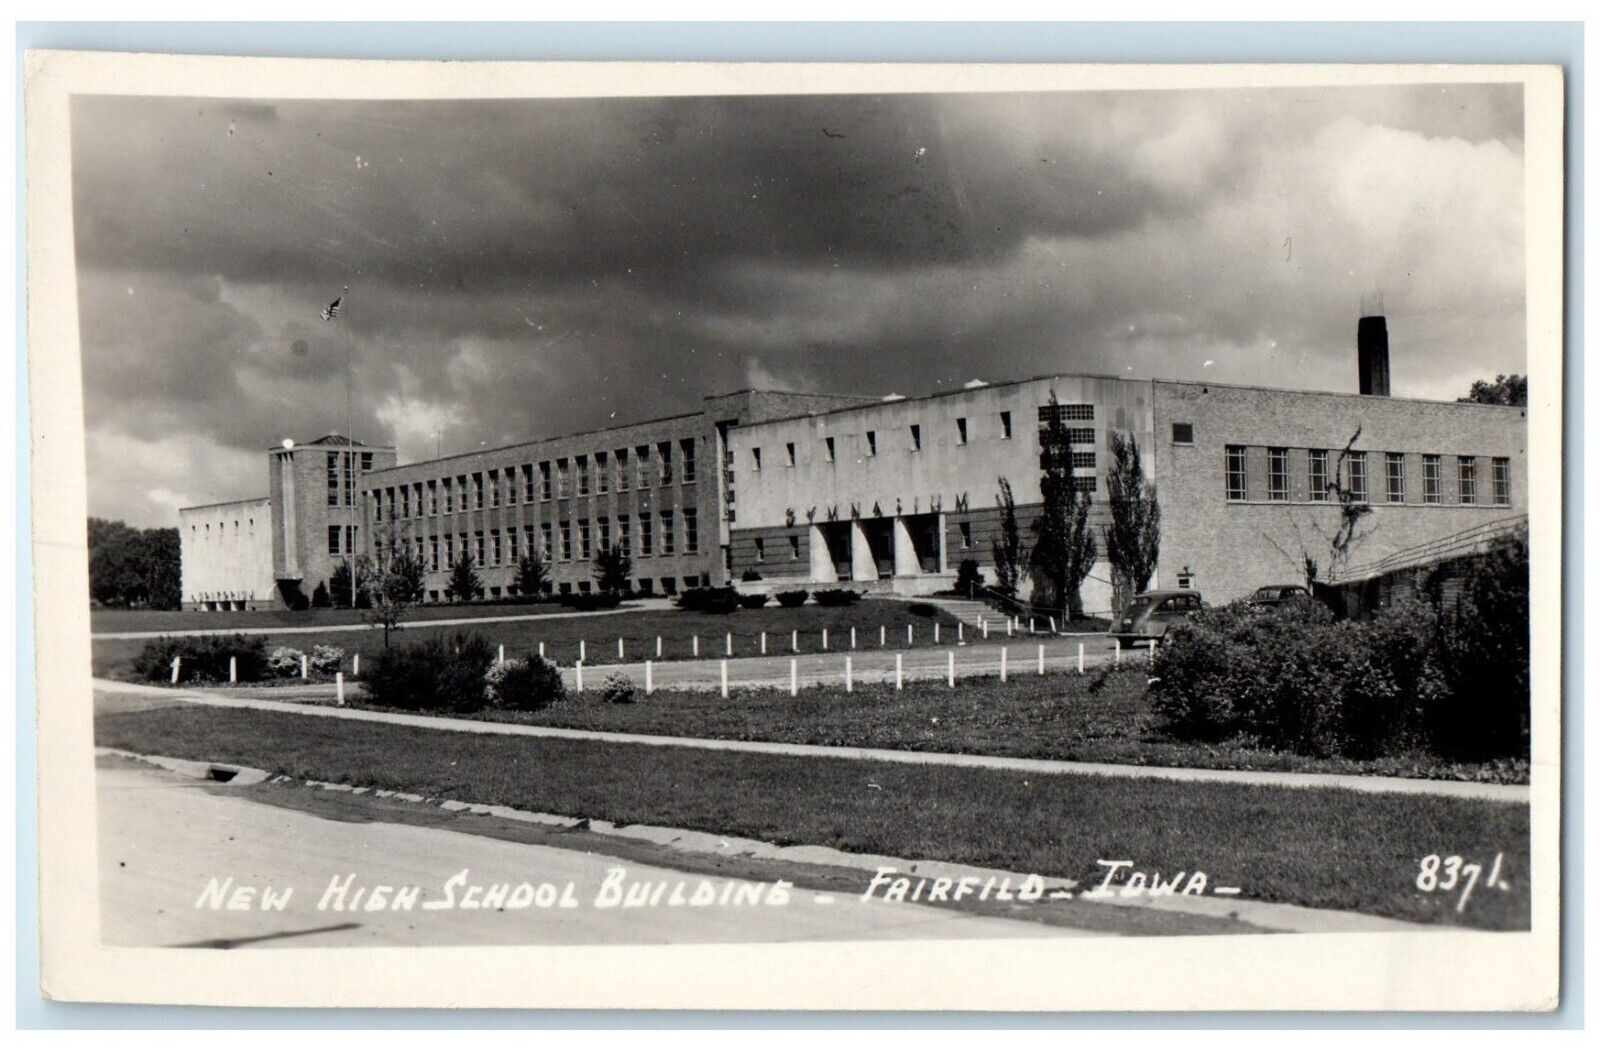 c1930's New High School Building Fairfield Iowa IA RPPC Photo Vintage Postcard